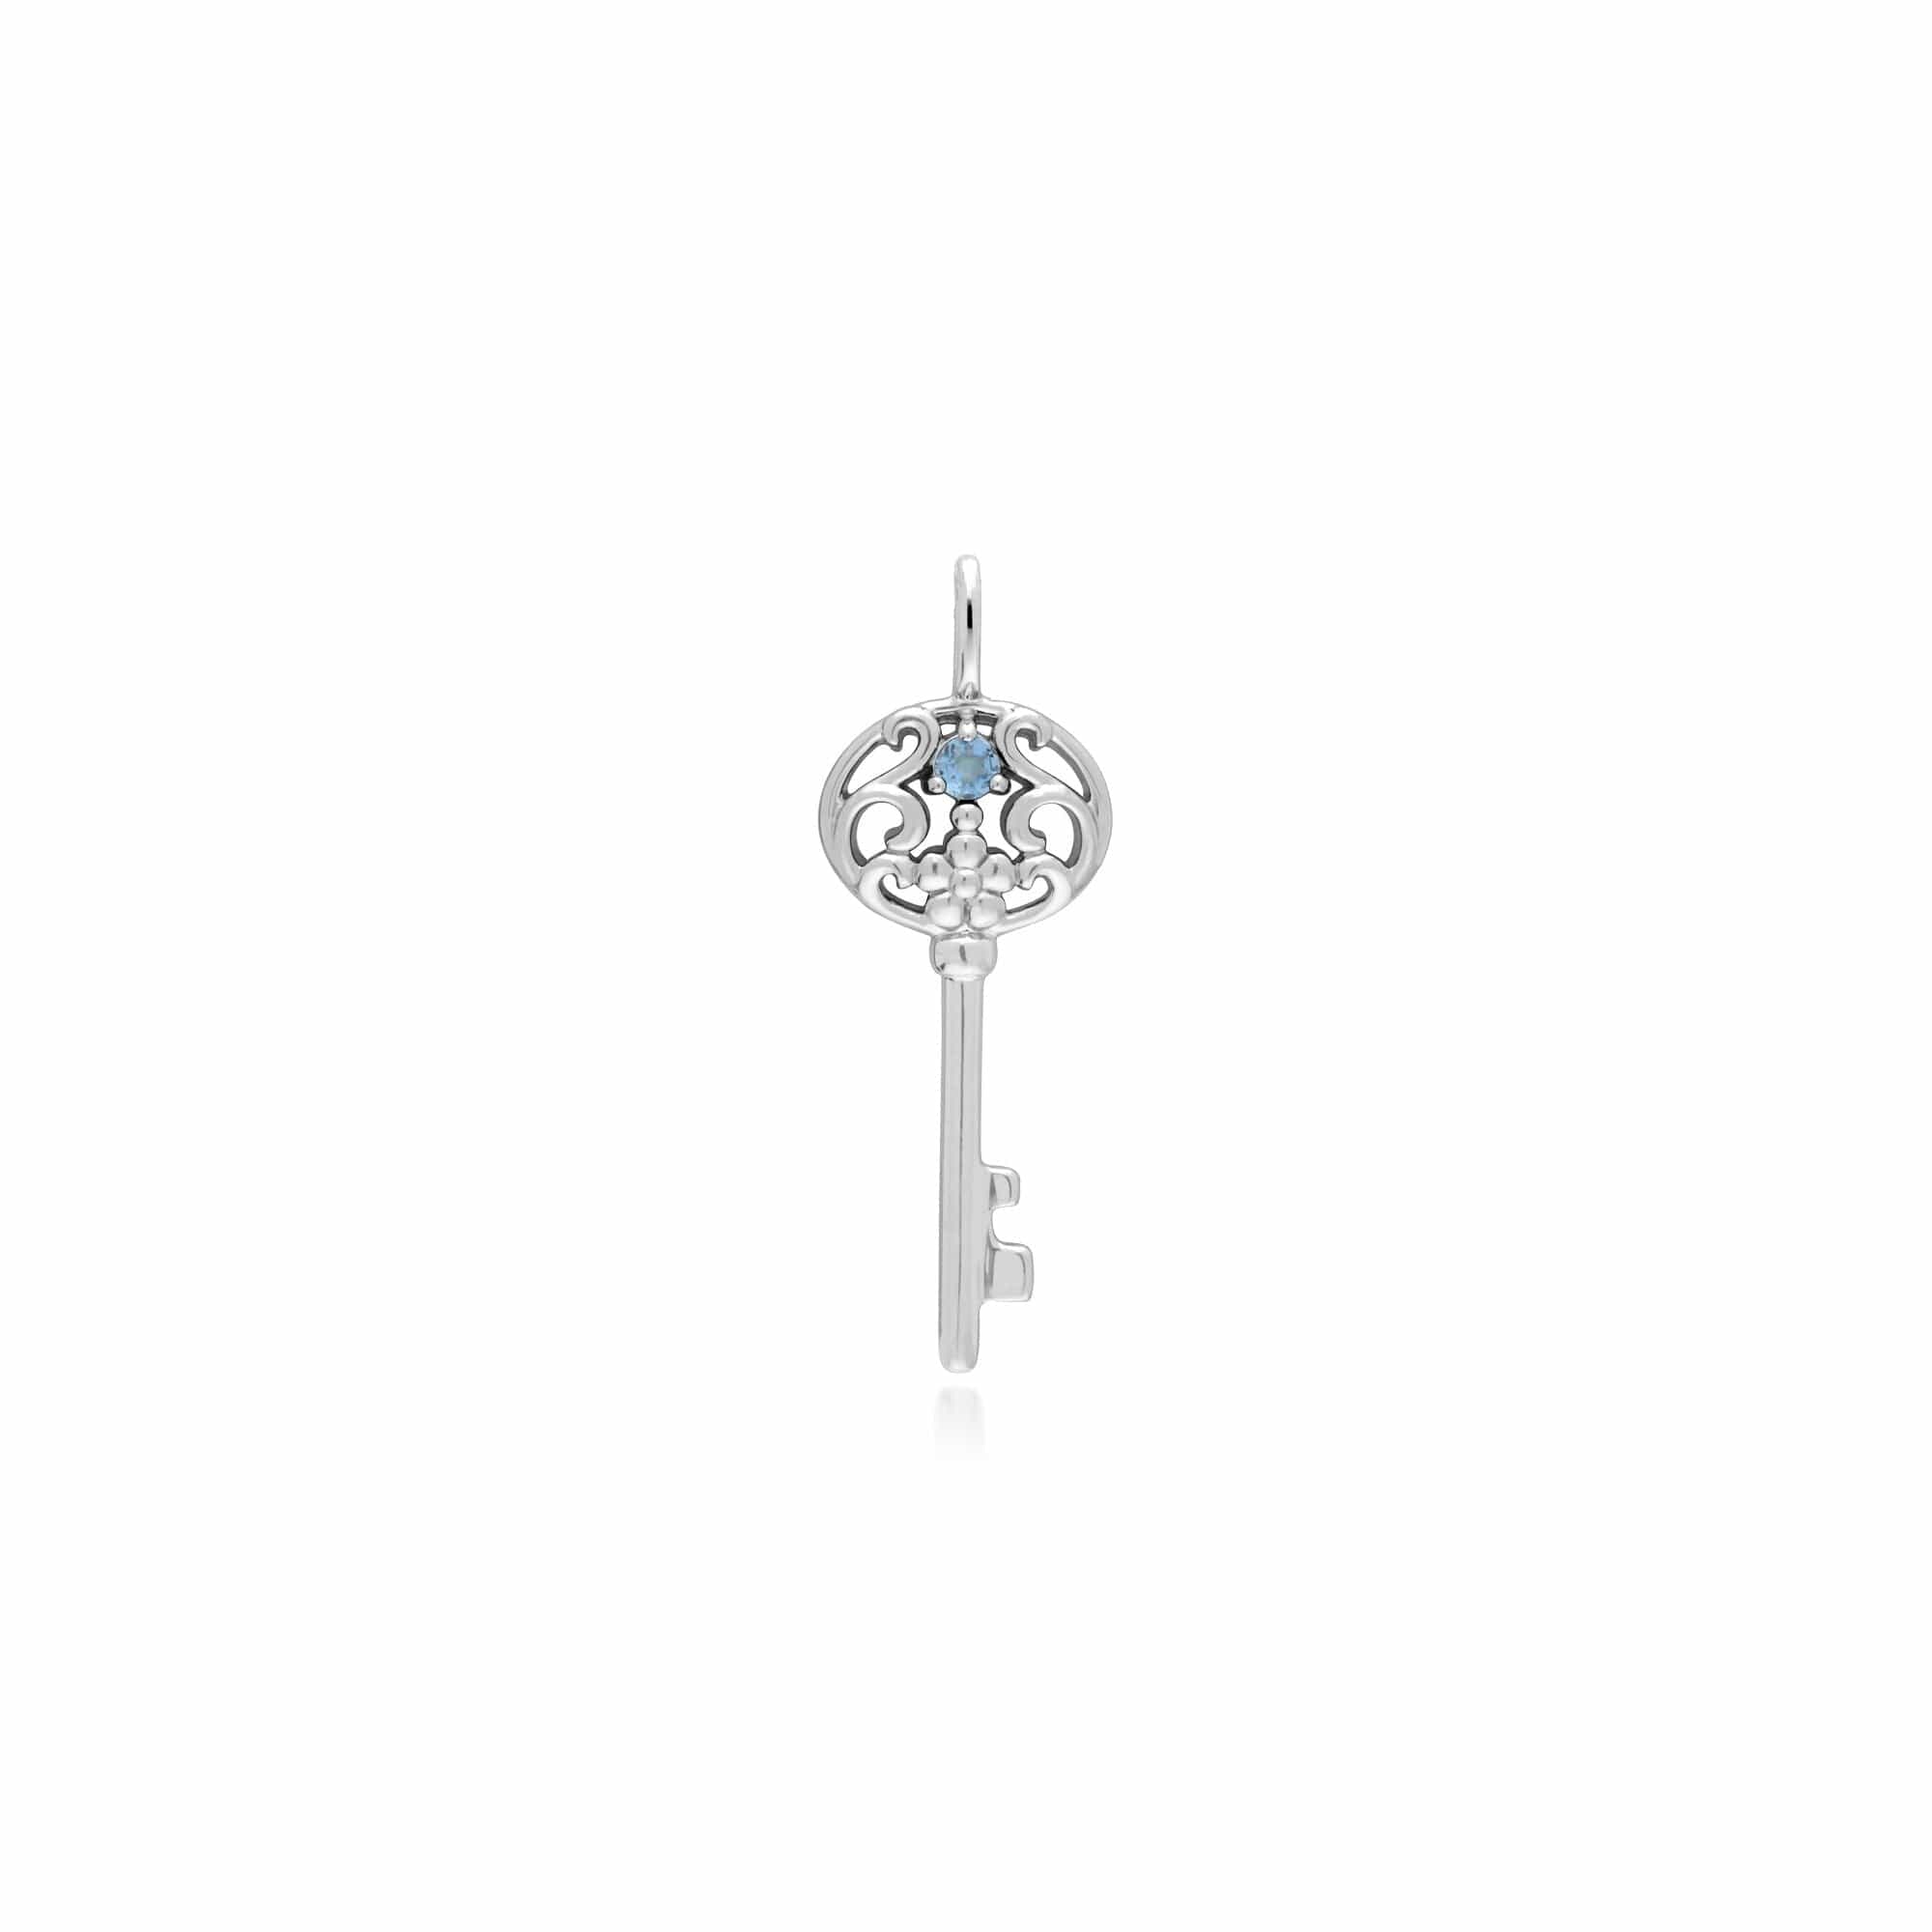 270P026813925-270P026601925 Classic Swirl Heart Lock Pendant & Aquamarine Big Key Charm in 925 Sterling Silver 2